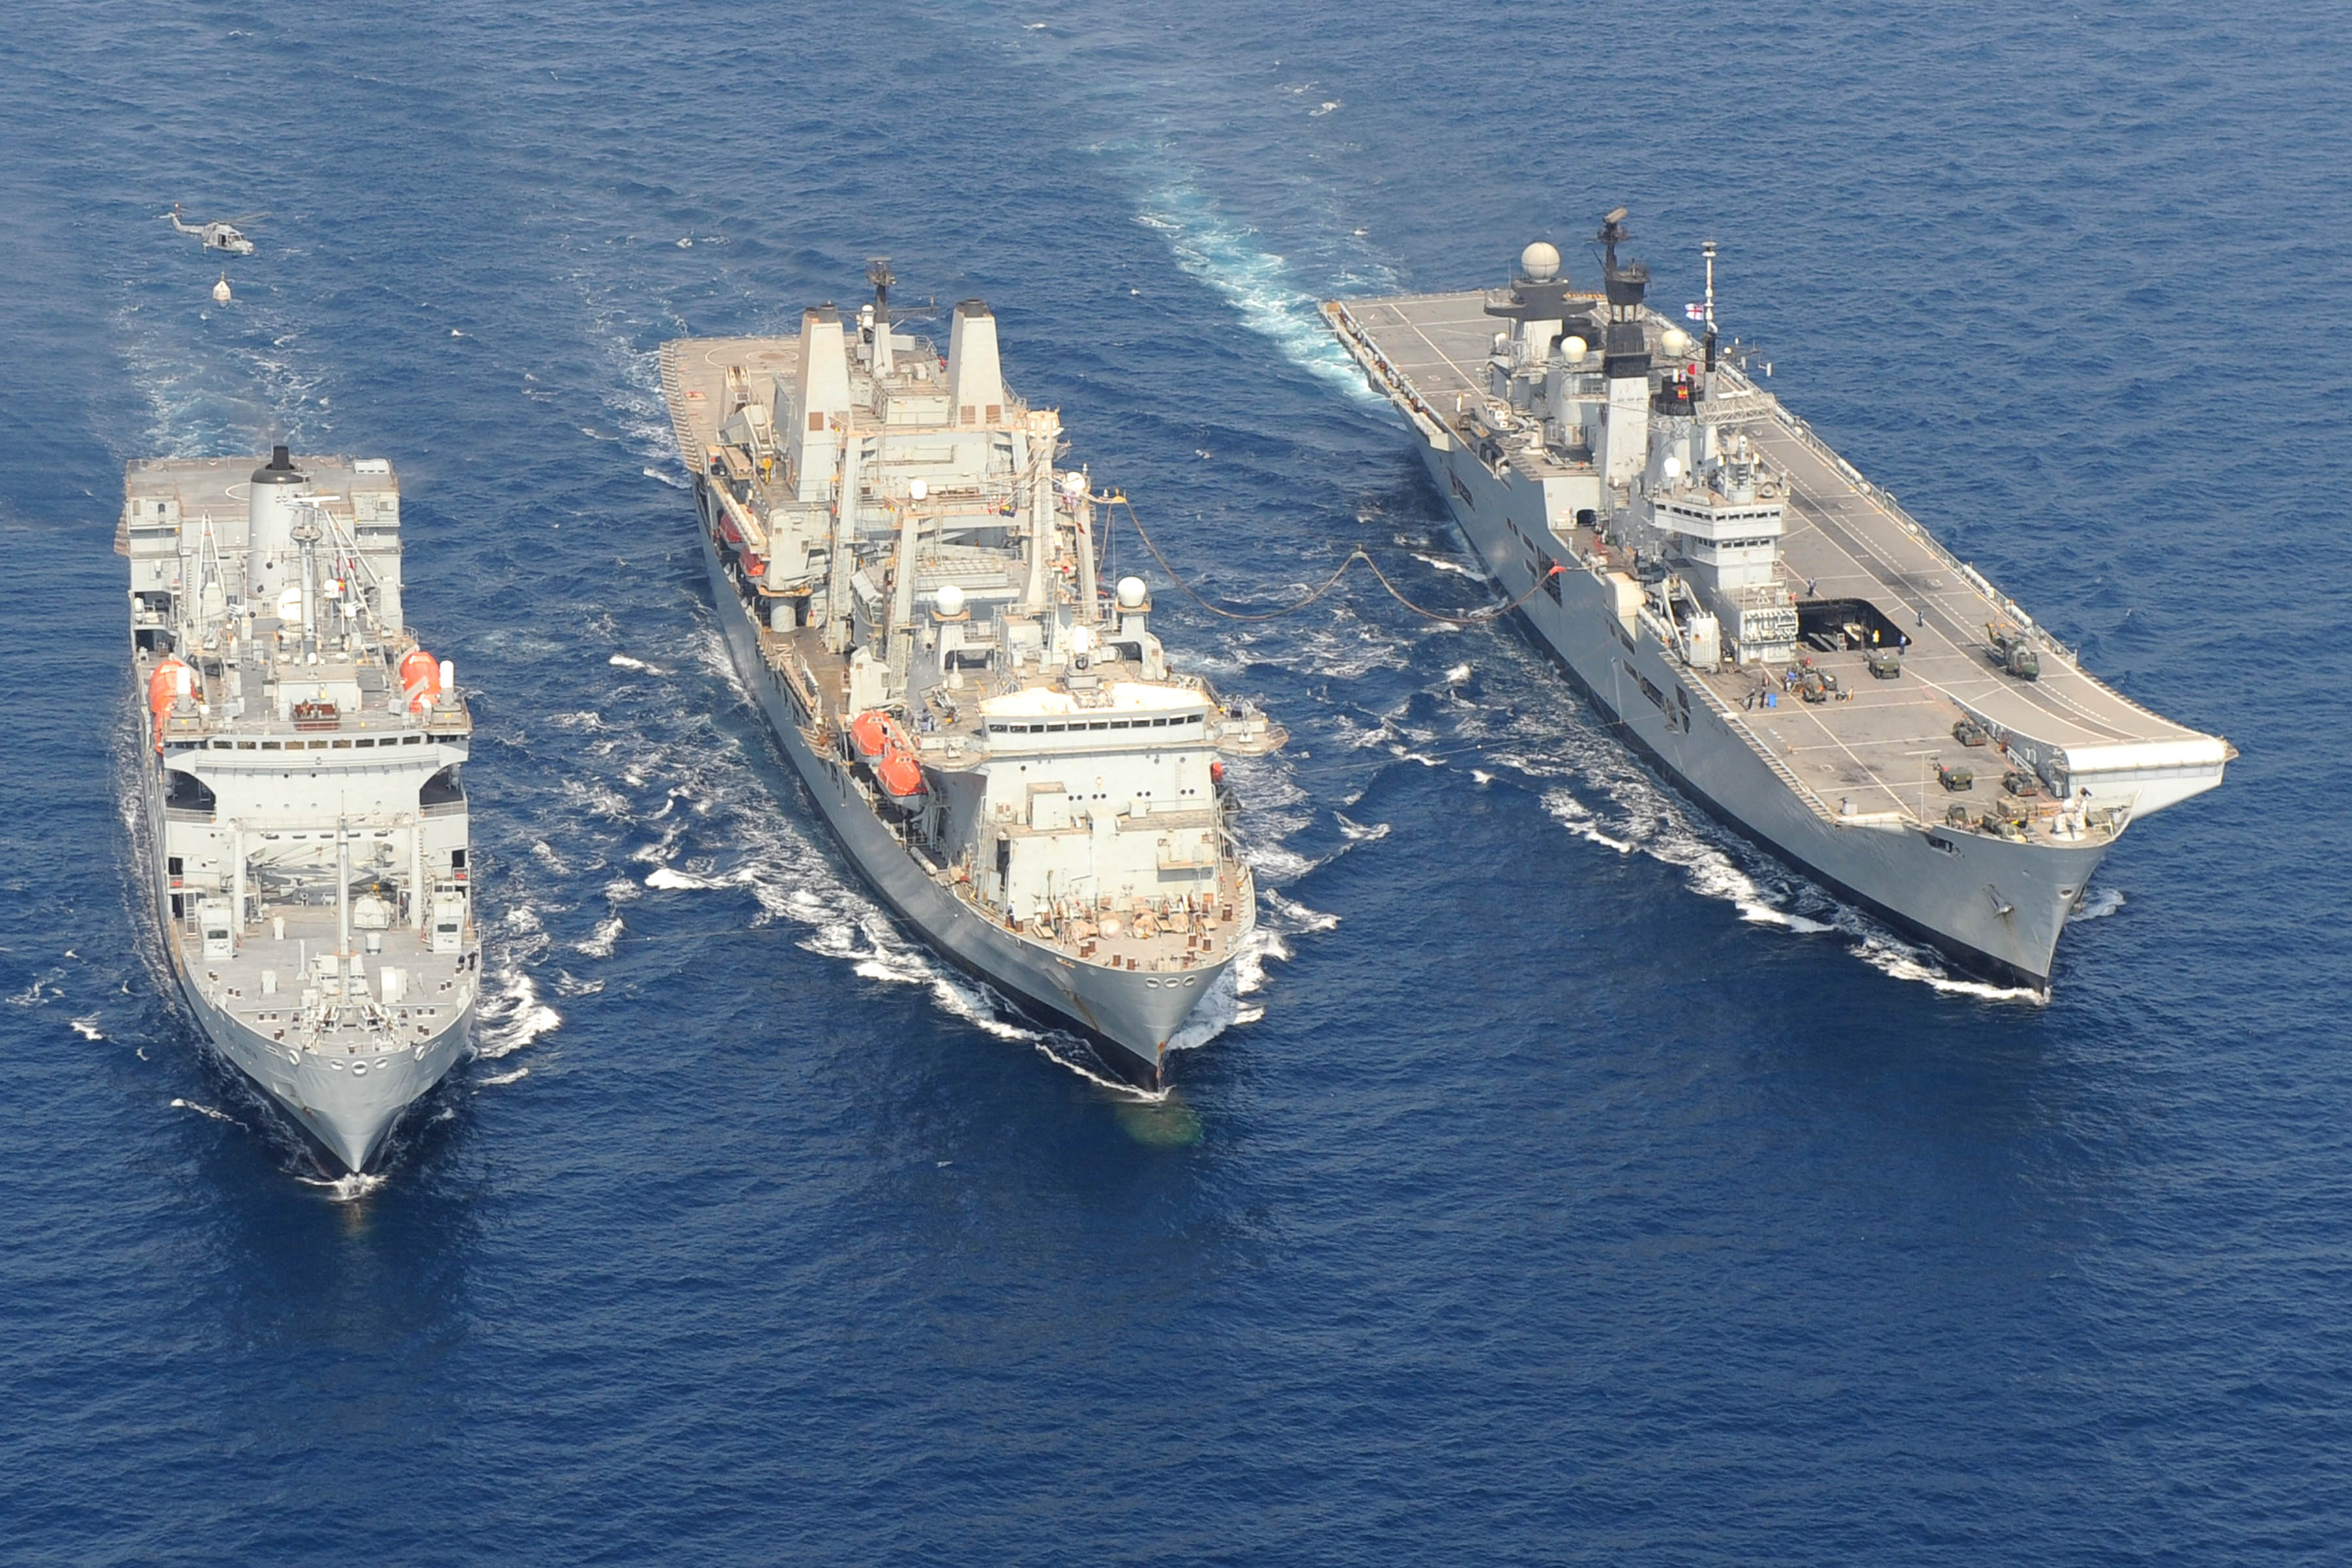 RFA Fort Austin, RFA Fort Victoria and HMS Illustrious at sea